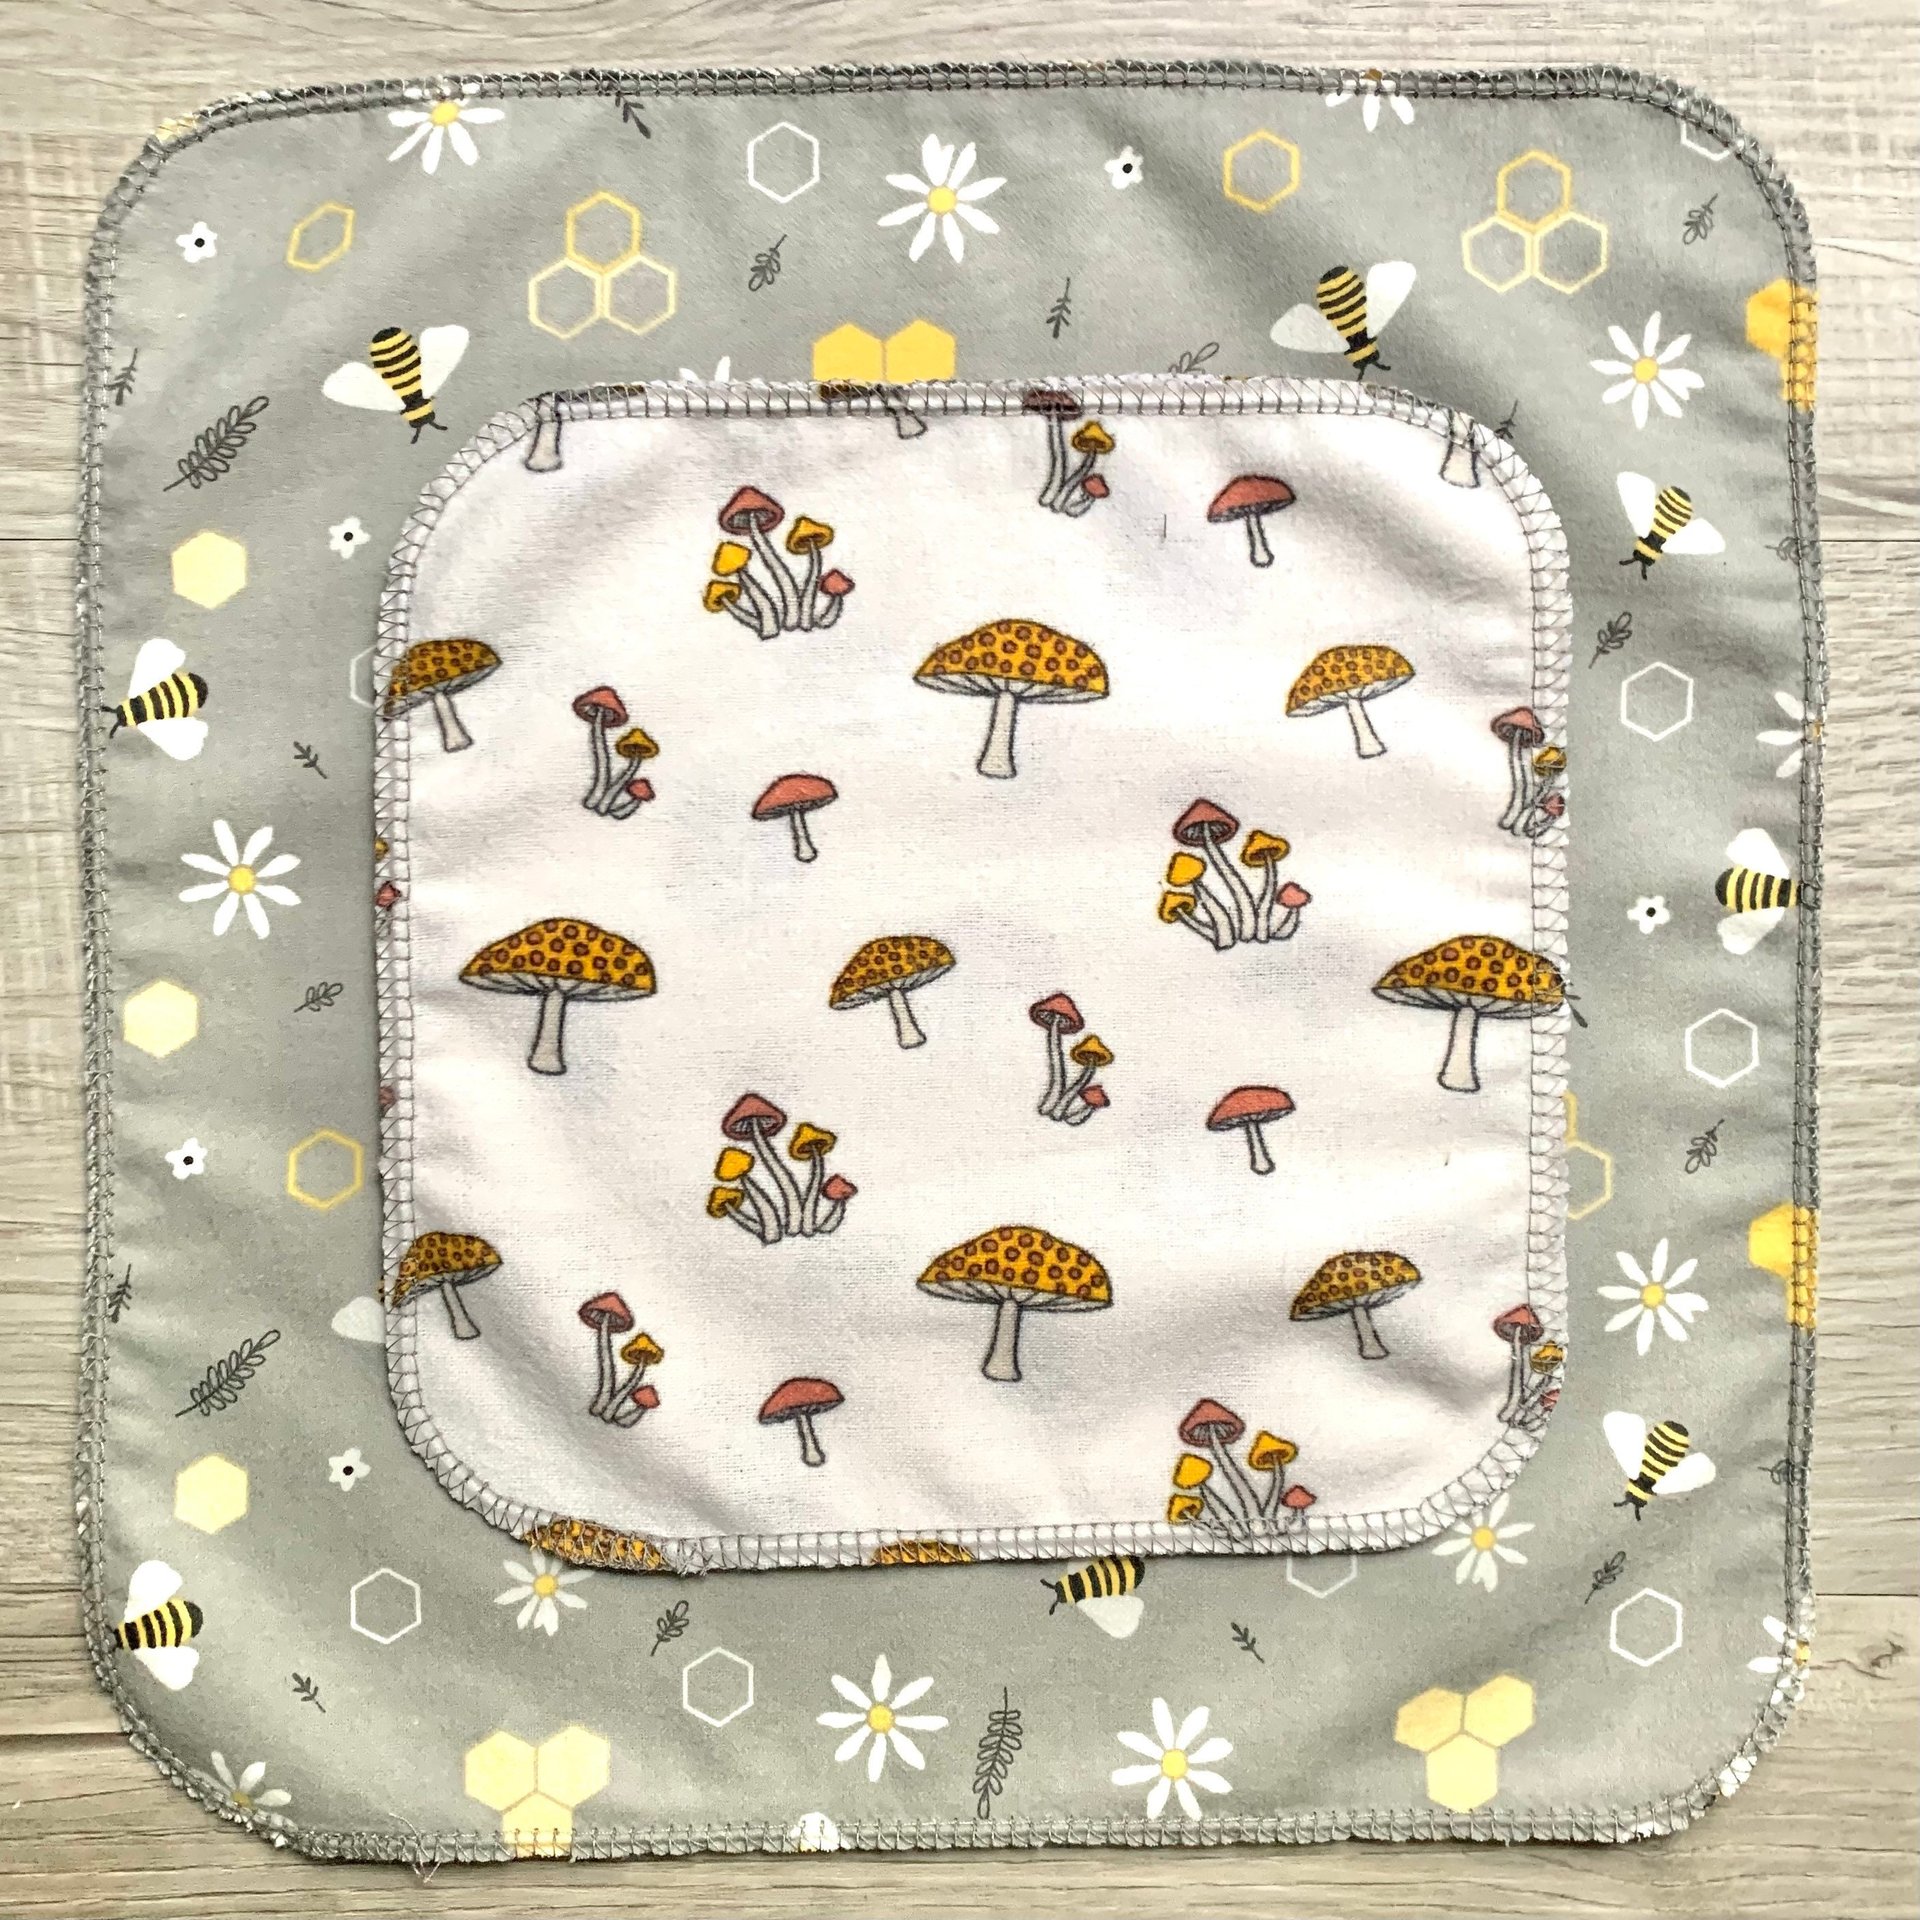 Funny Mushrooms Paperless Towels 